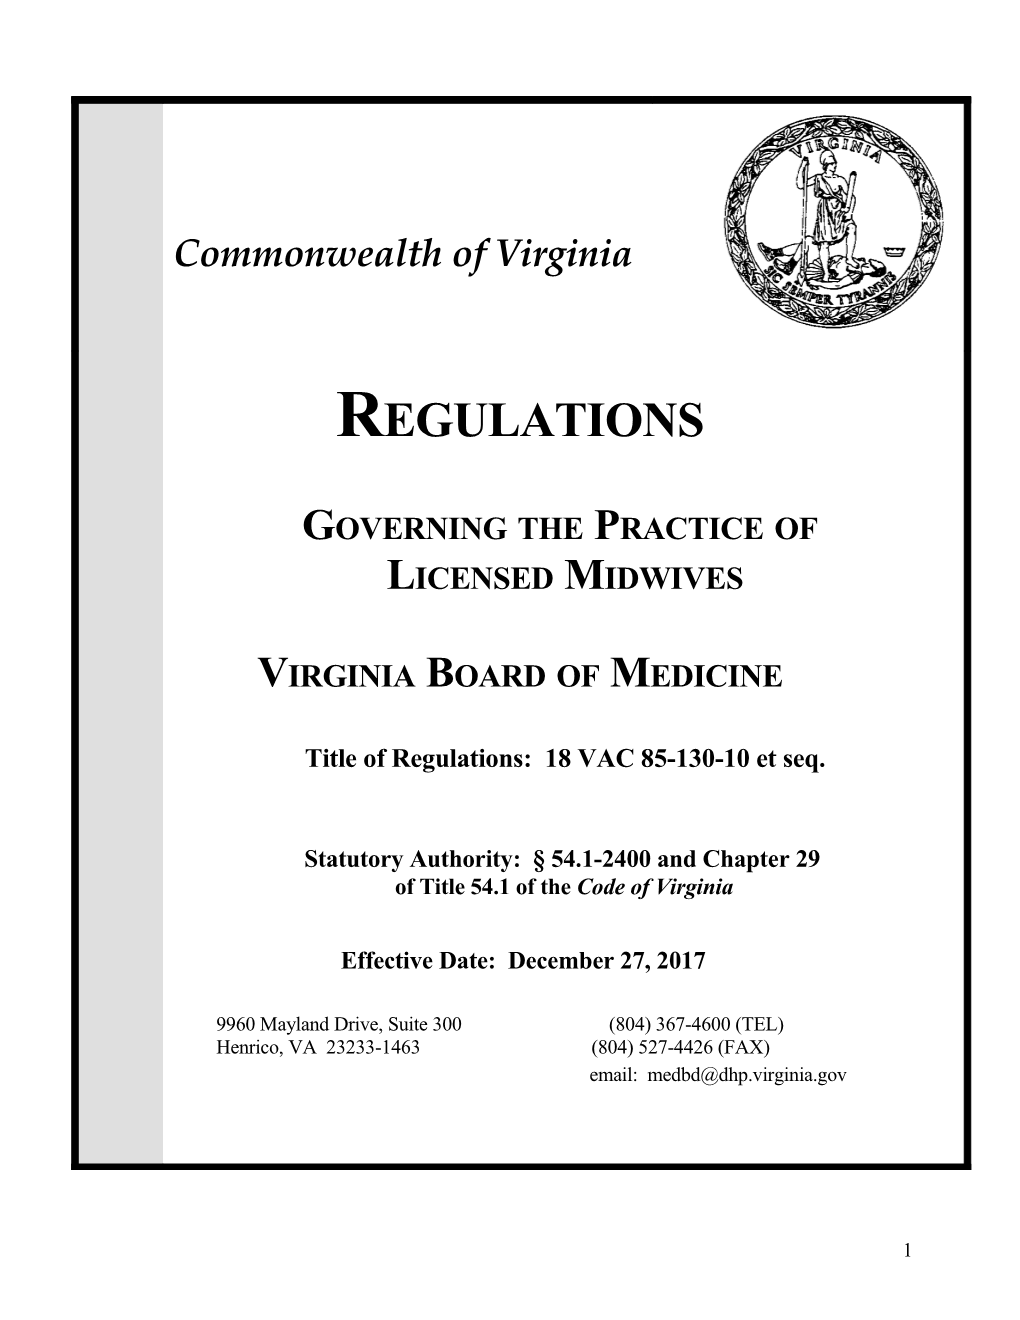 Virginia Administrative Code s2